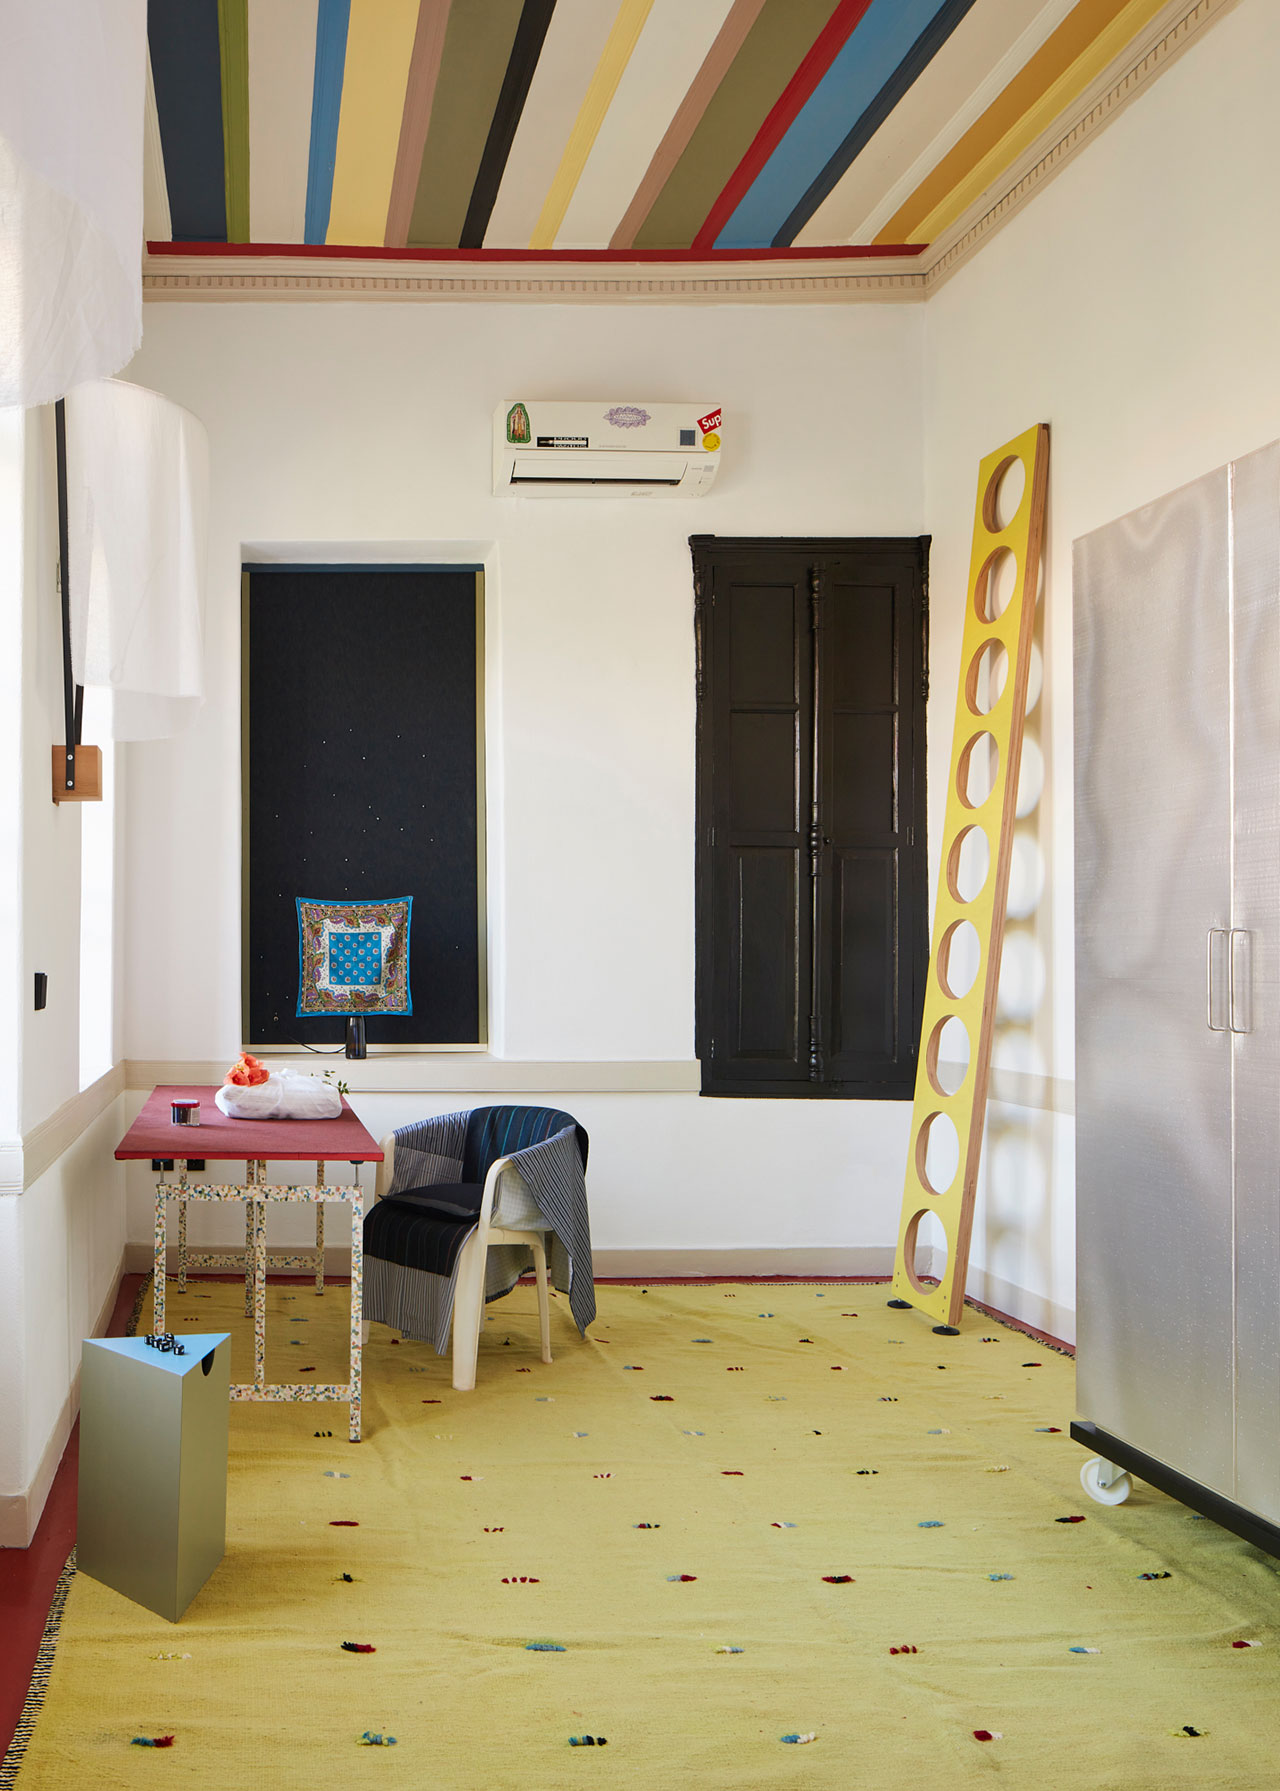 4Rooms Kastellorizo. Interior design project for La Società delle Api residency program. Room designed by Julie Richoz. Photography by Depasquale+Maffini.